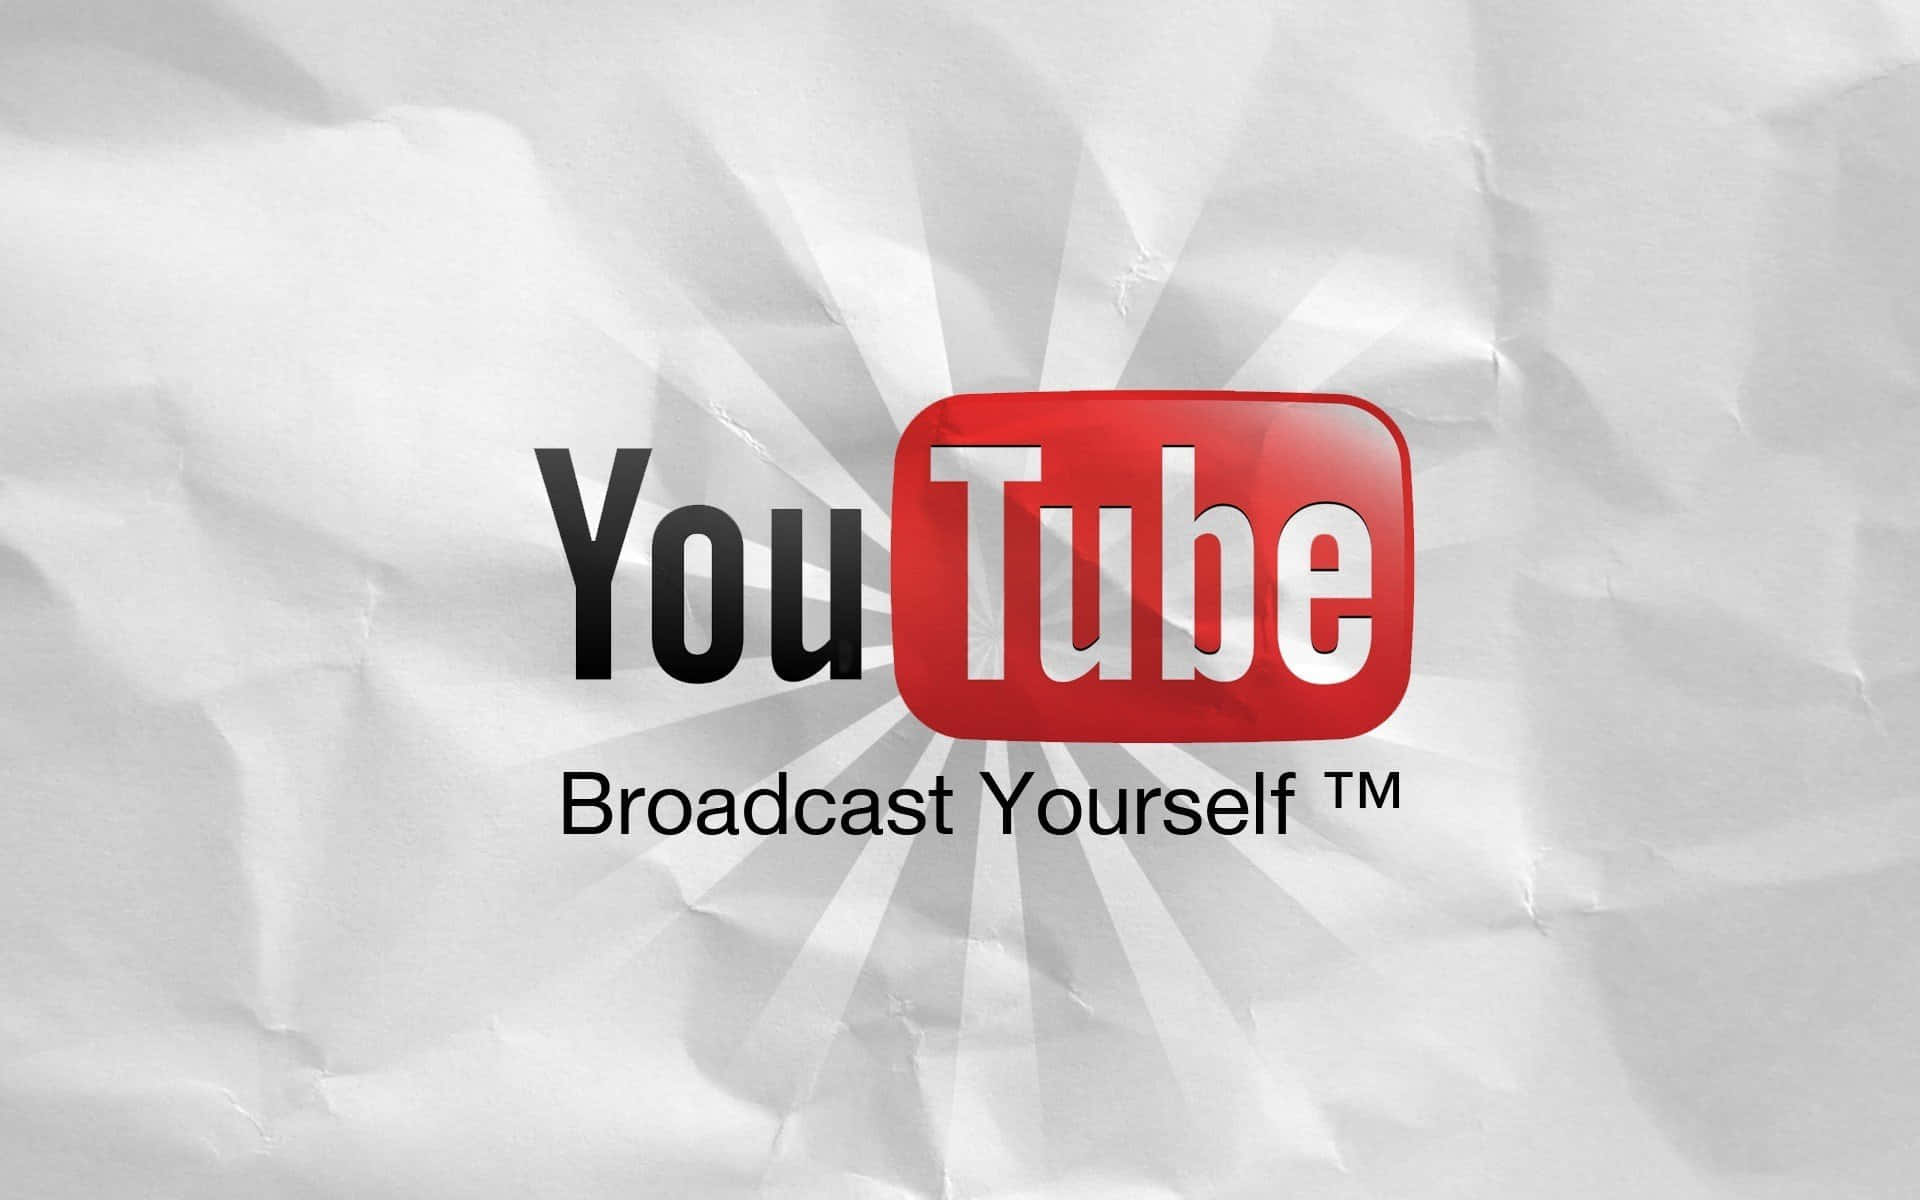 YouTube Logo on a Black Background